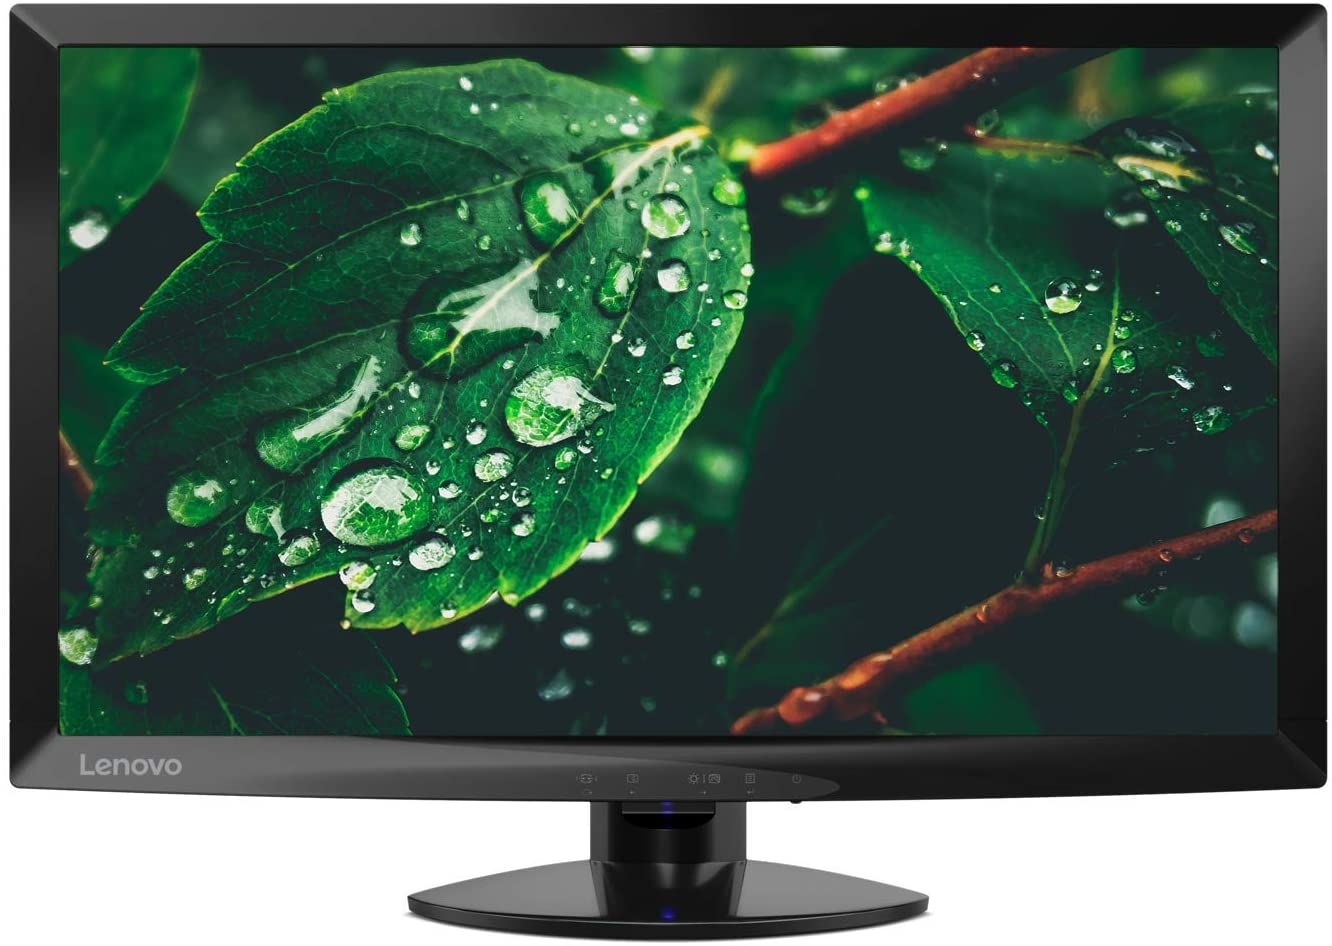 Lenovo C24 - Monitor de 23,8" (FullHD, 1920x1080, 3ms de respuesta, 60 Hz, contraste 1000:1, HDMI, VGA) color negro